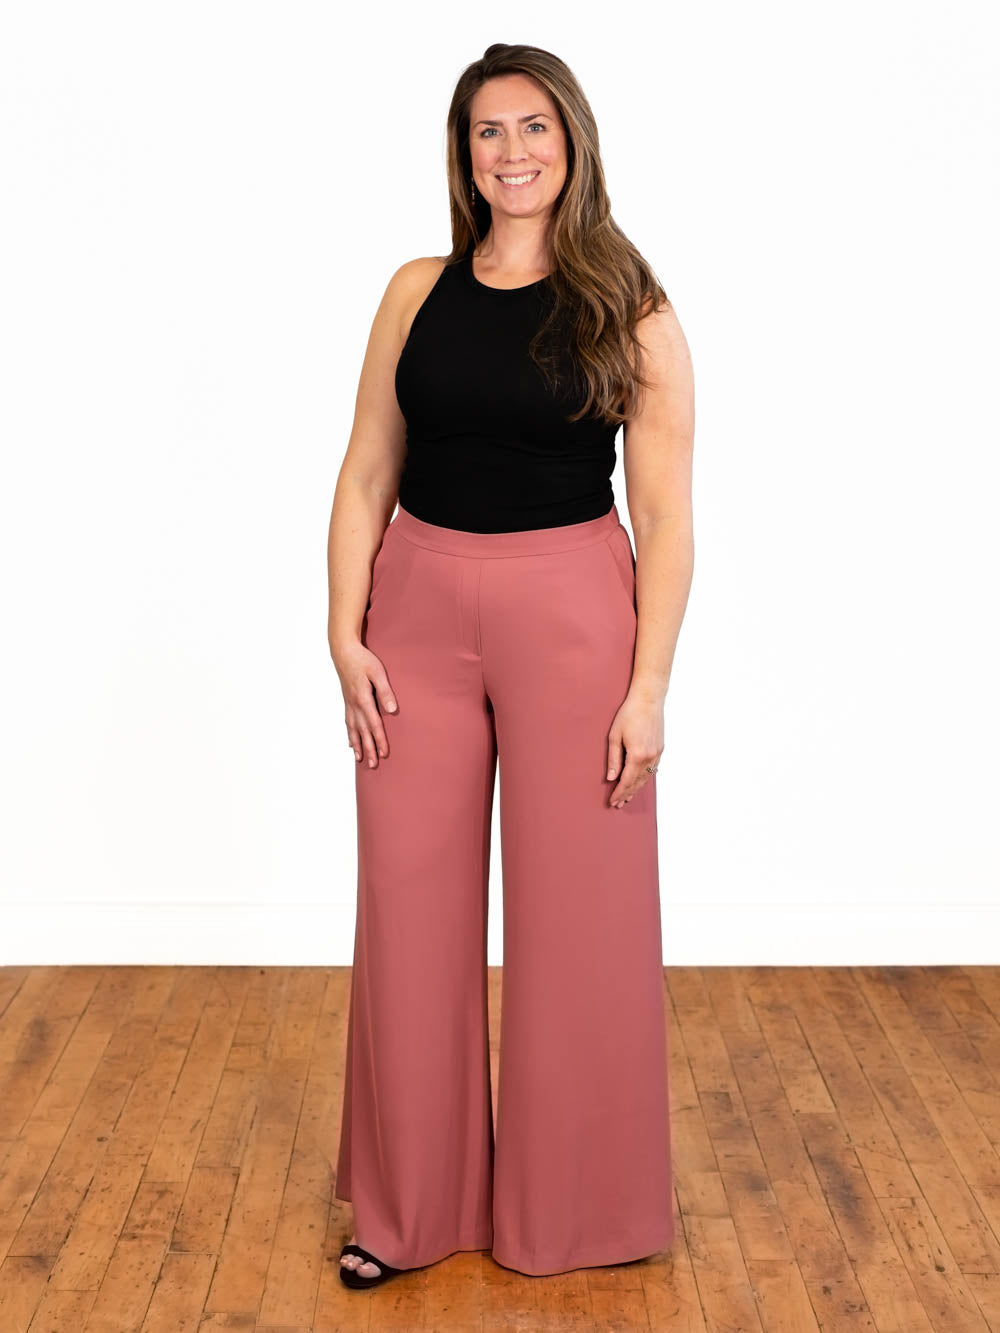 Women's Tall-Size Pants